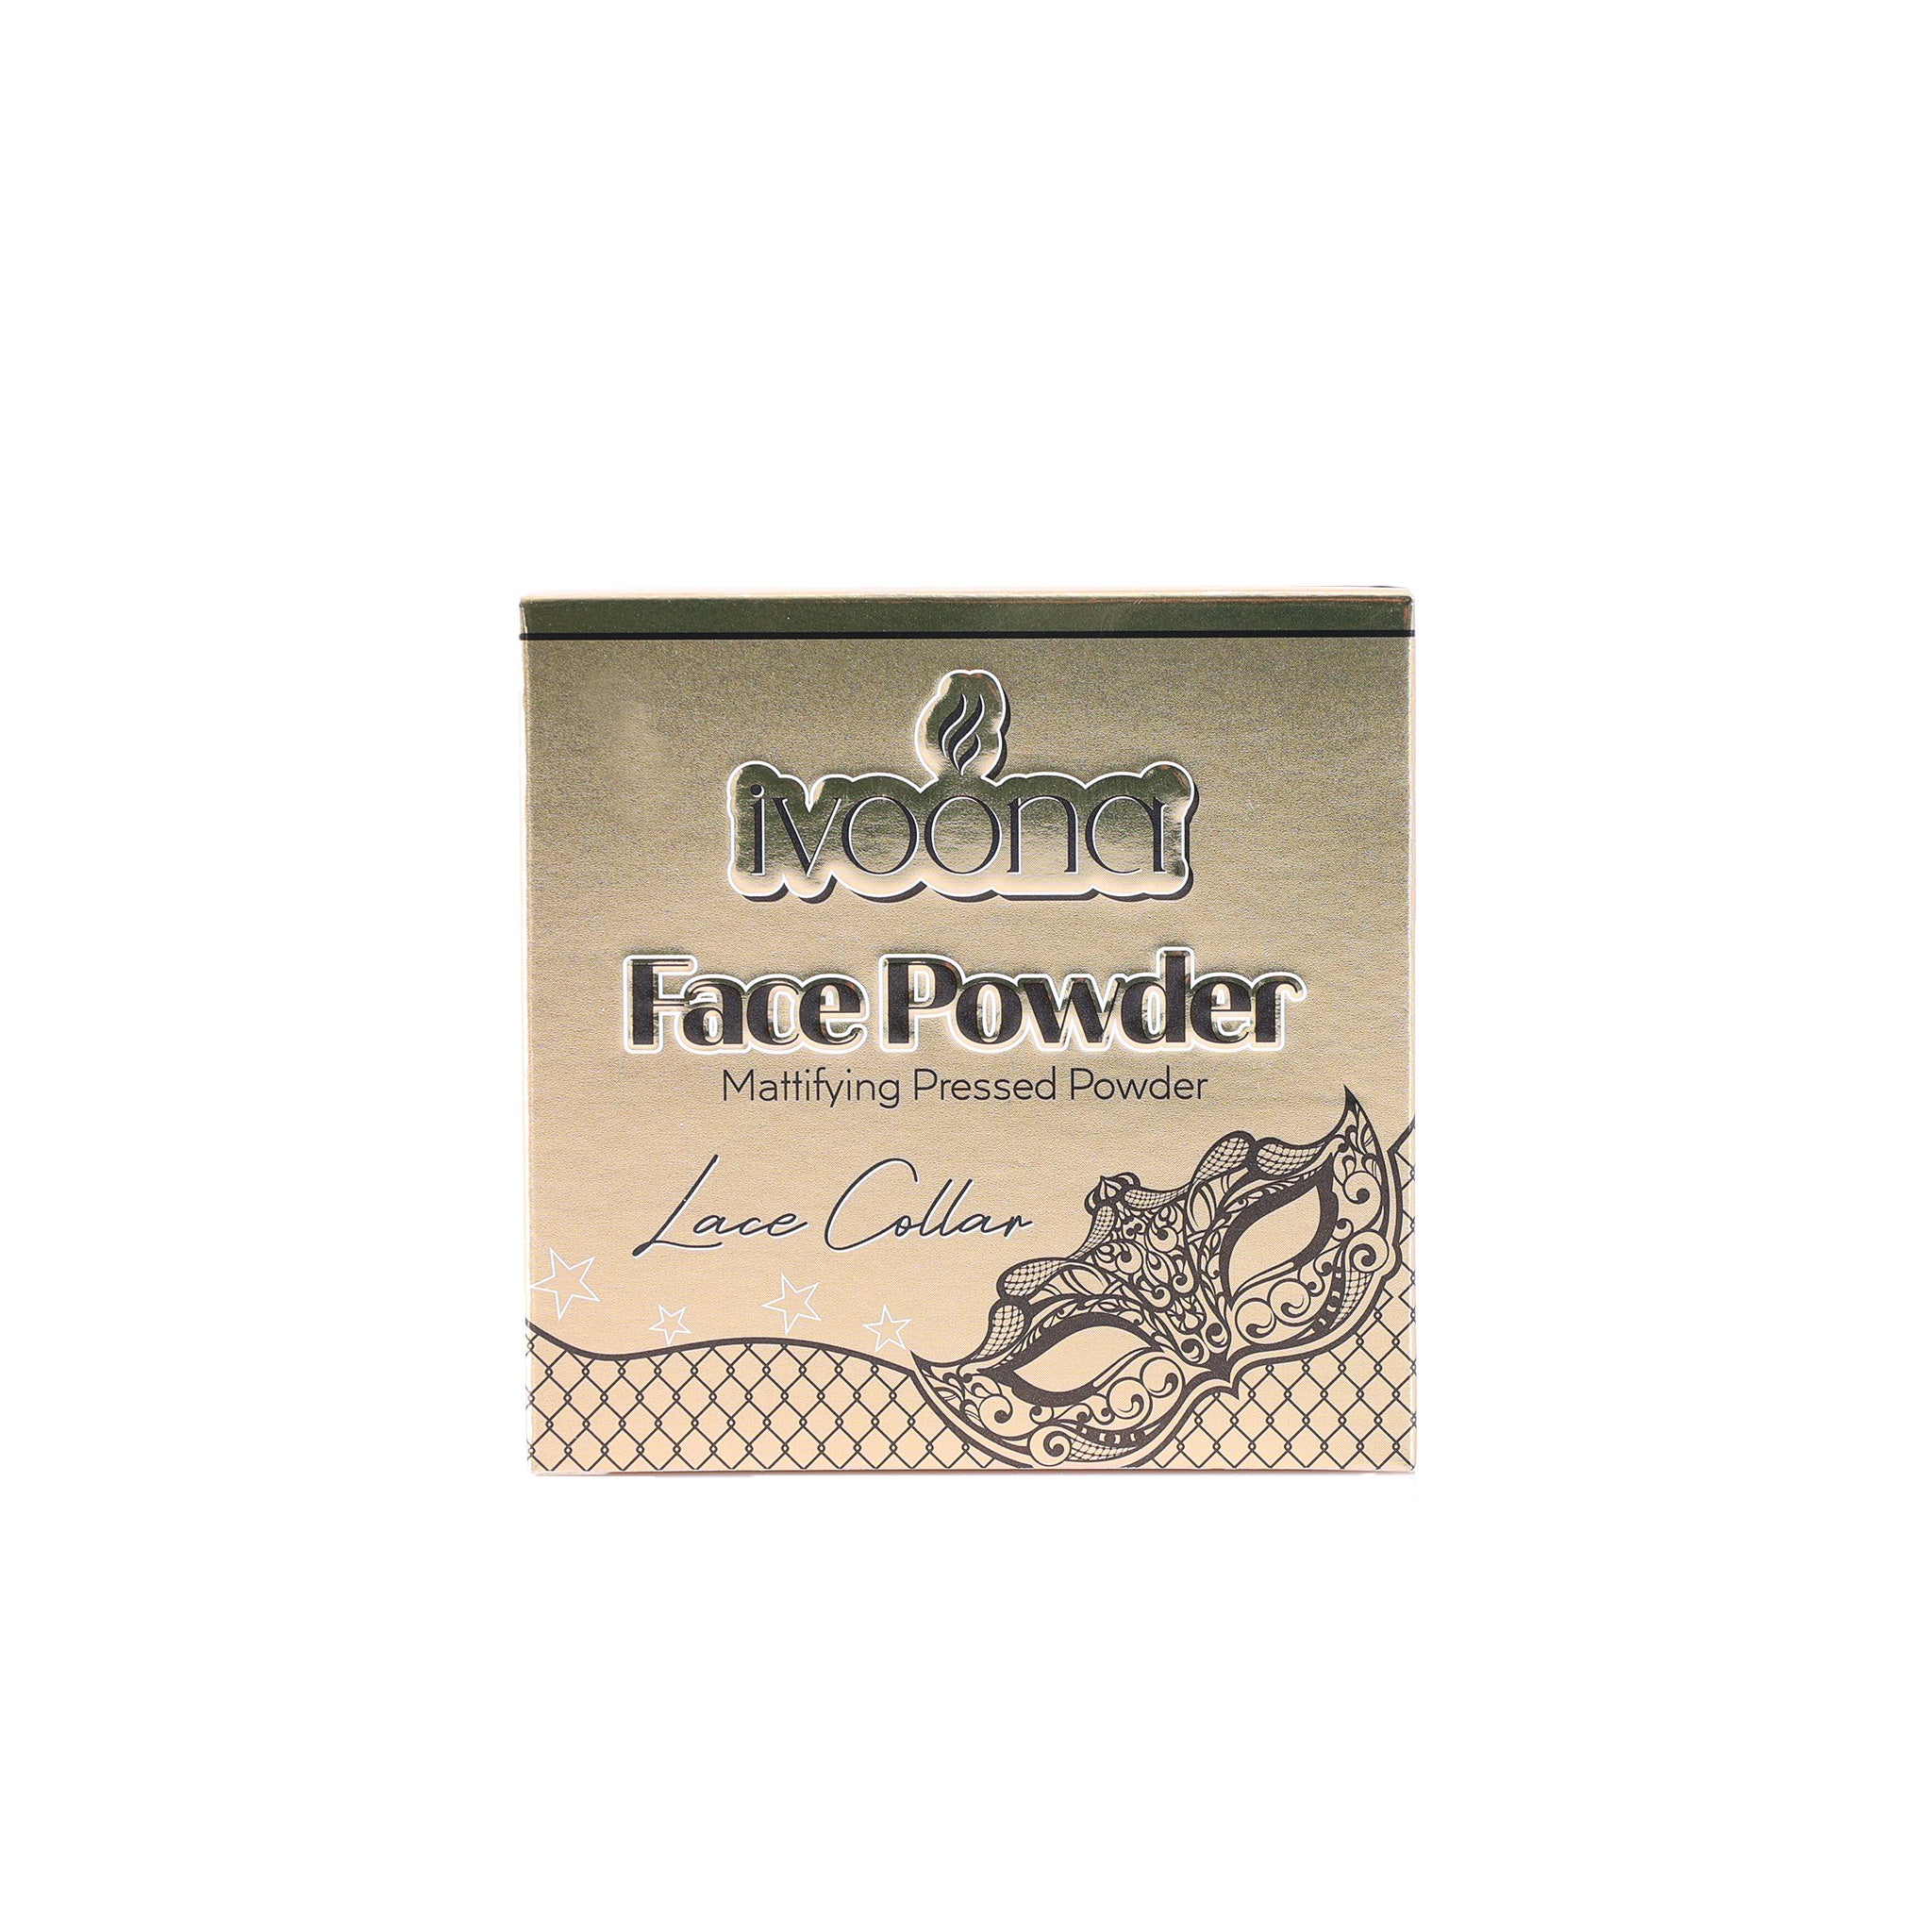 Ivoona Face Powder